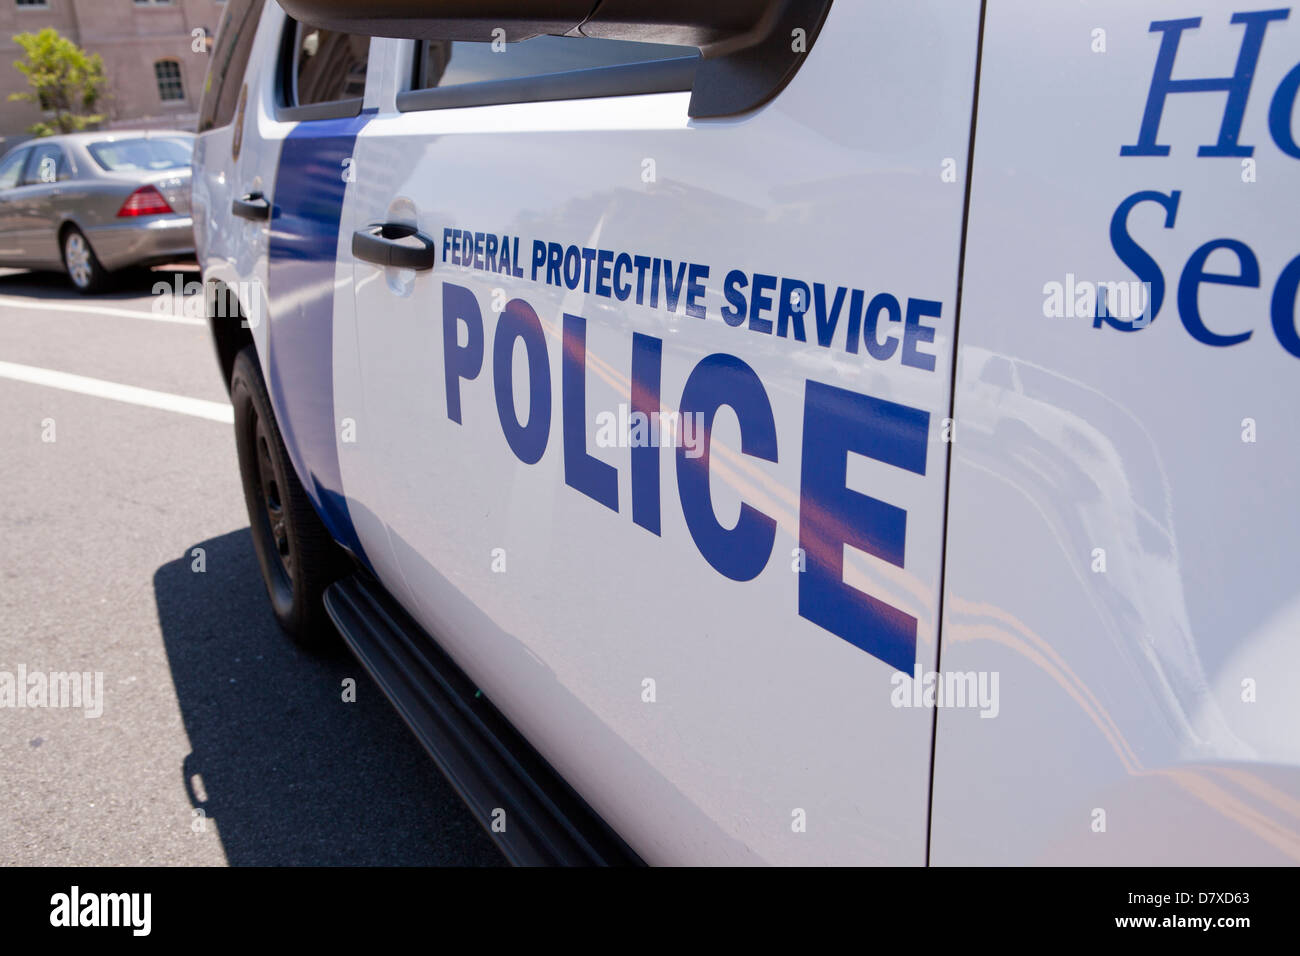 Homeland Security police car - Washington, DC USA Stock Photo